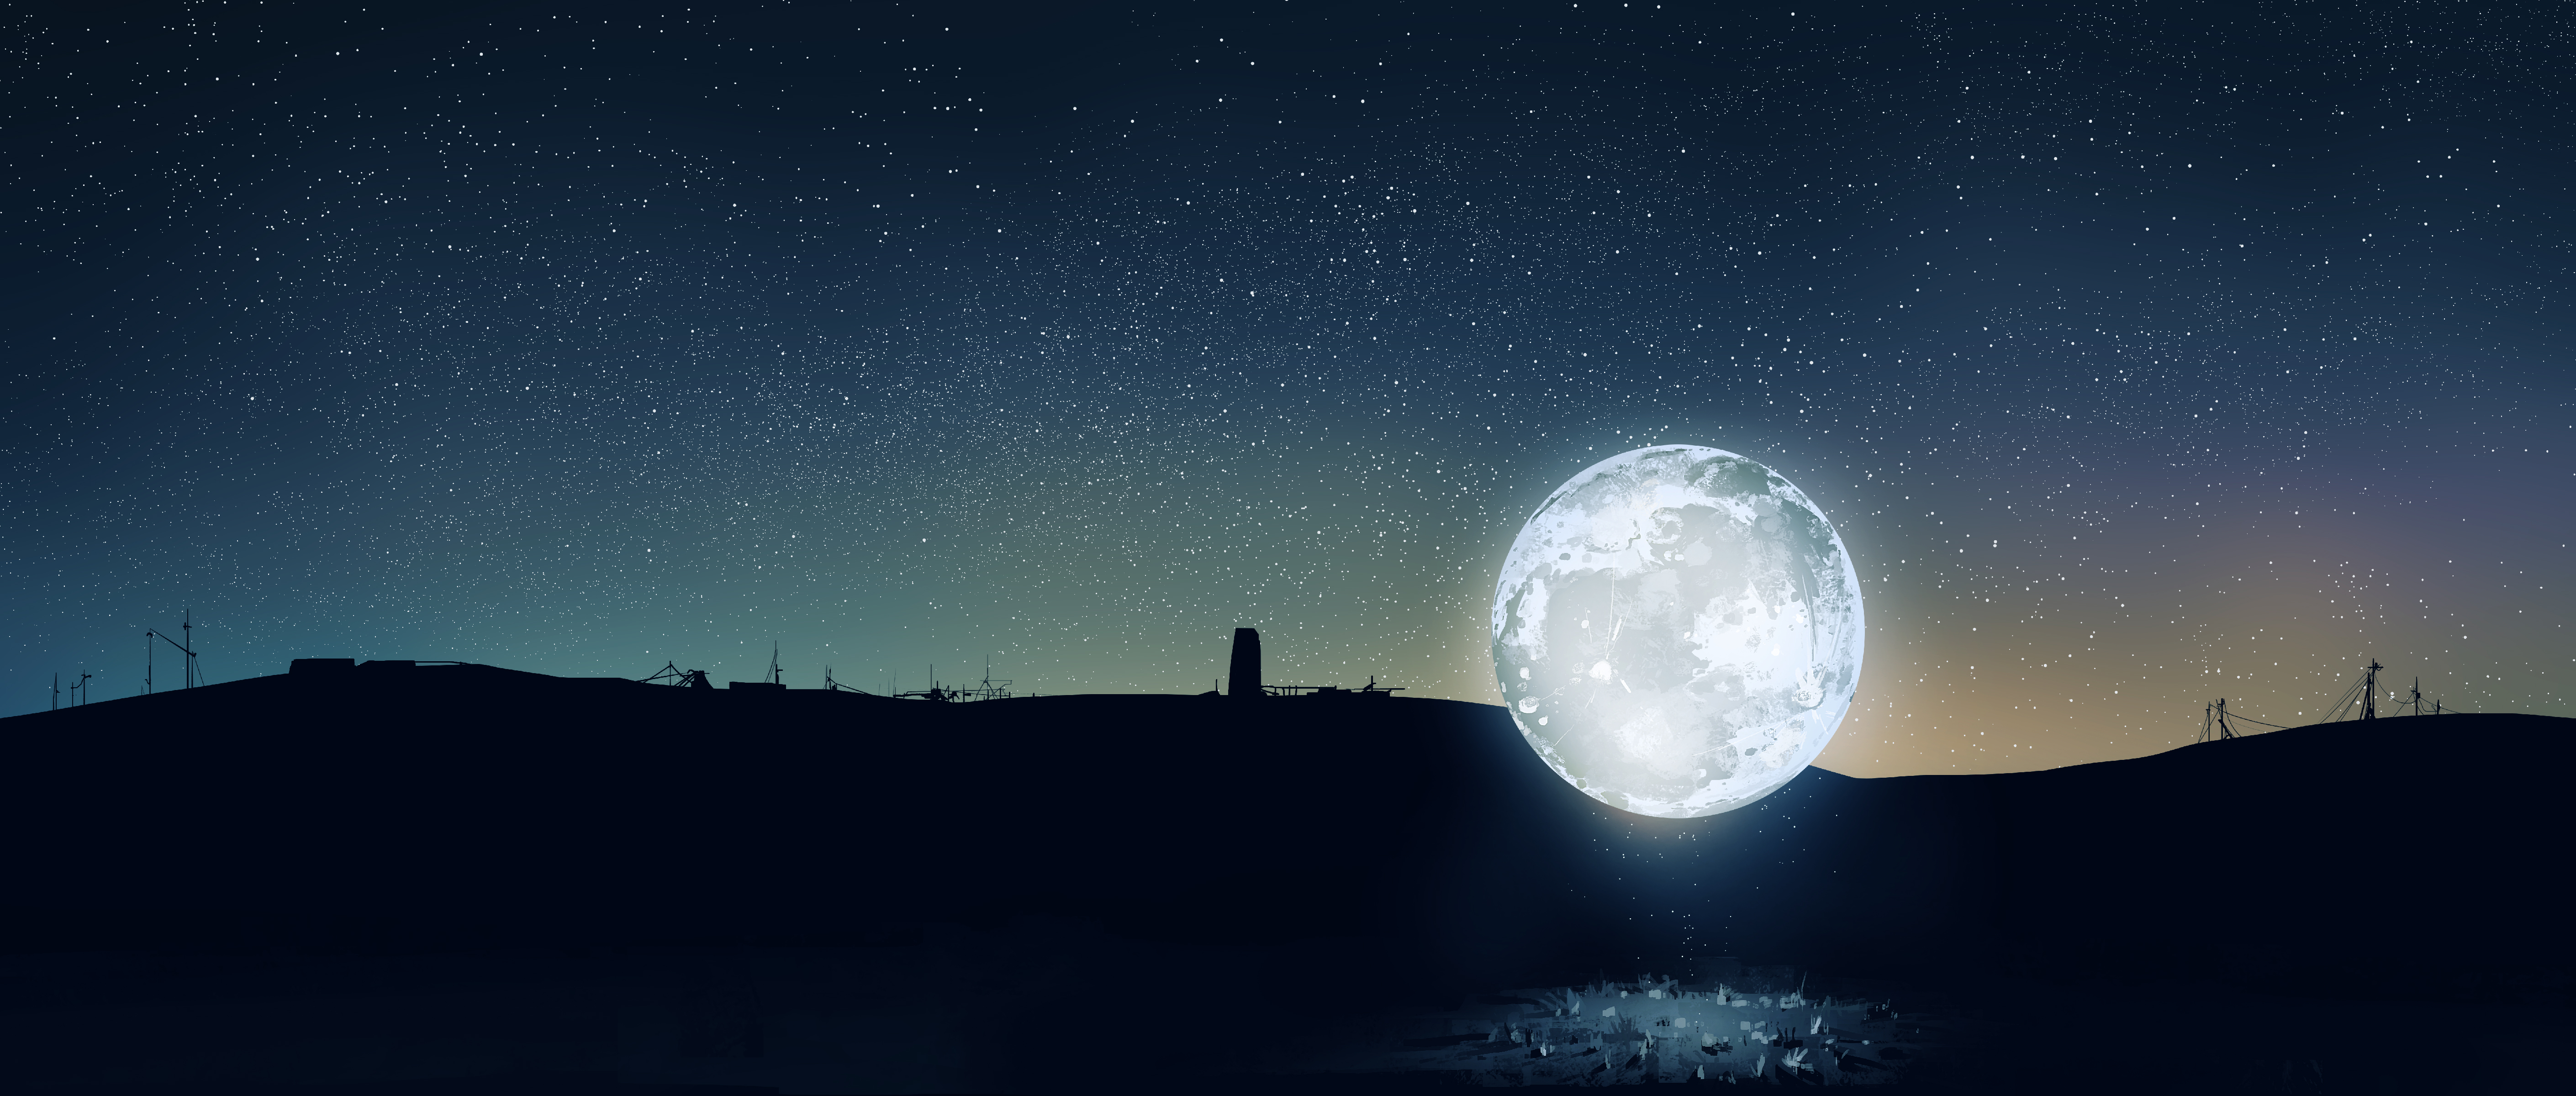 General 5640x2400 Gracile digital art artwork illustration night stars Moon starry night sky simple background